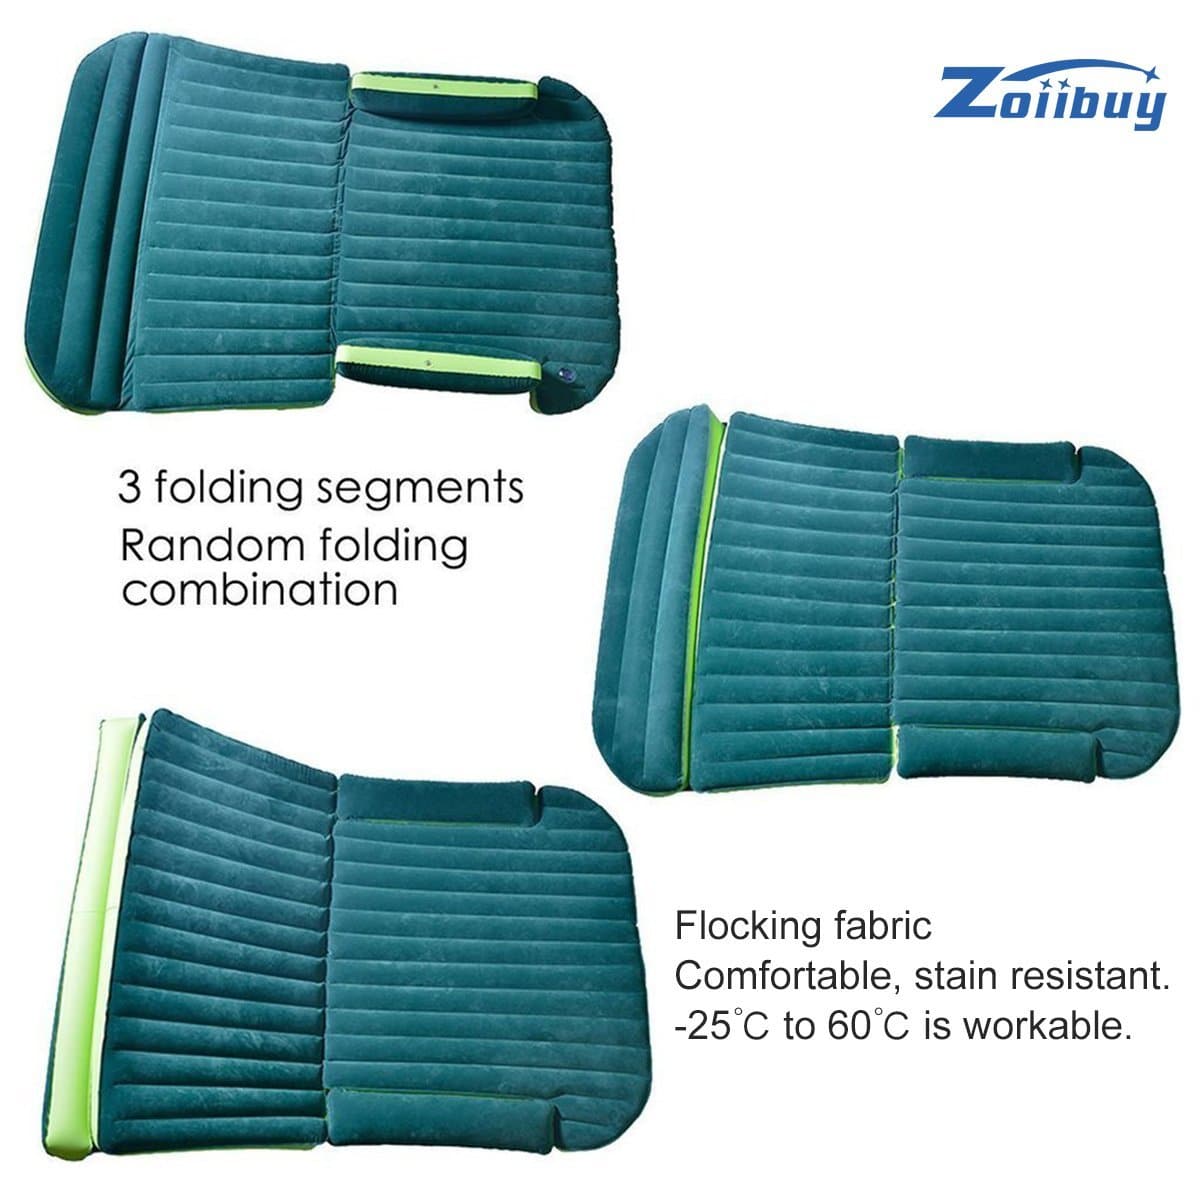 Zoiibuy Car Mattress Folding